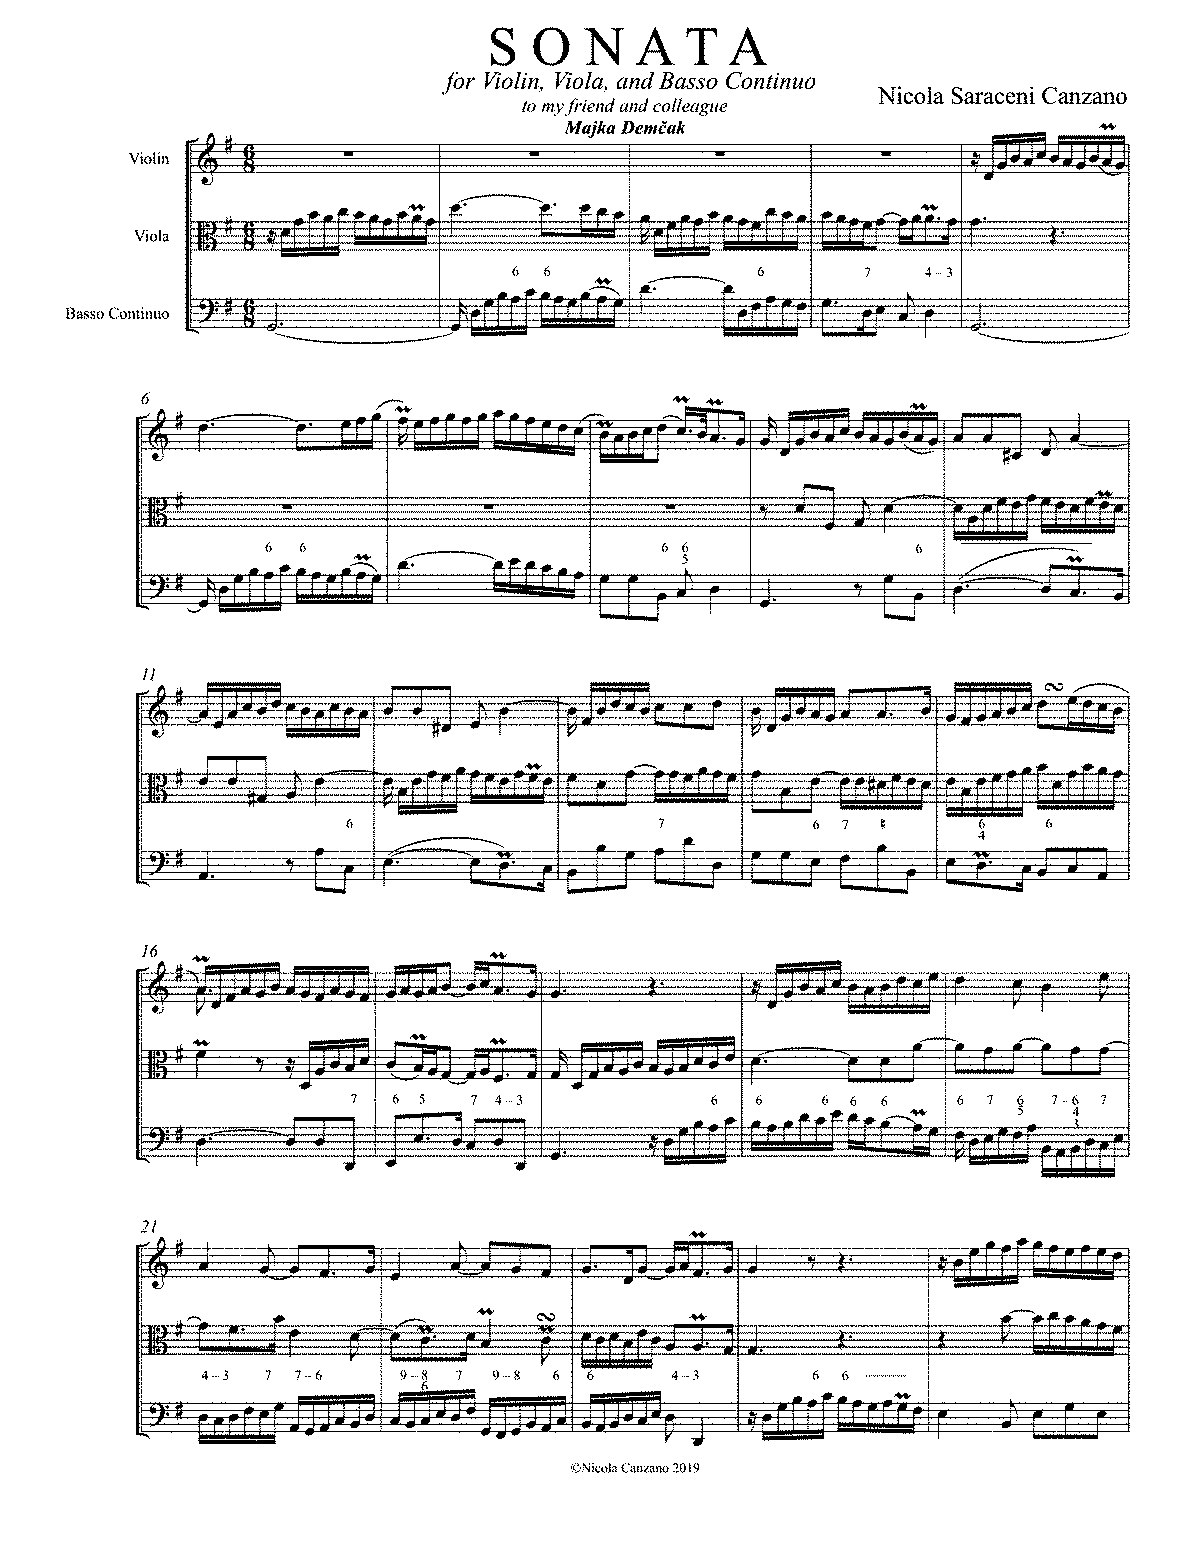 Trio Sonata No.1 in G major (Canzano, Nicola) - IMSLP